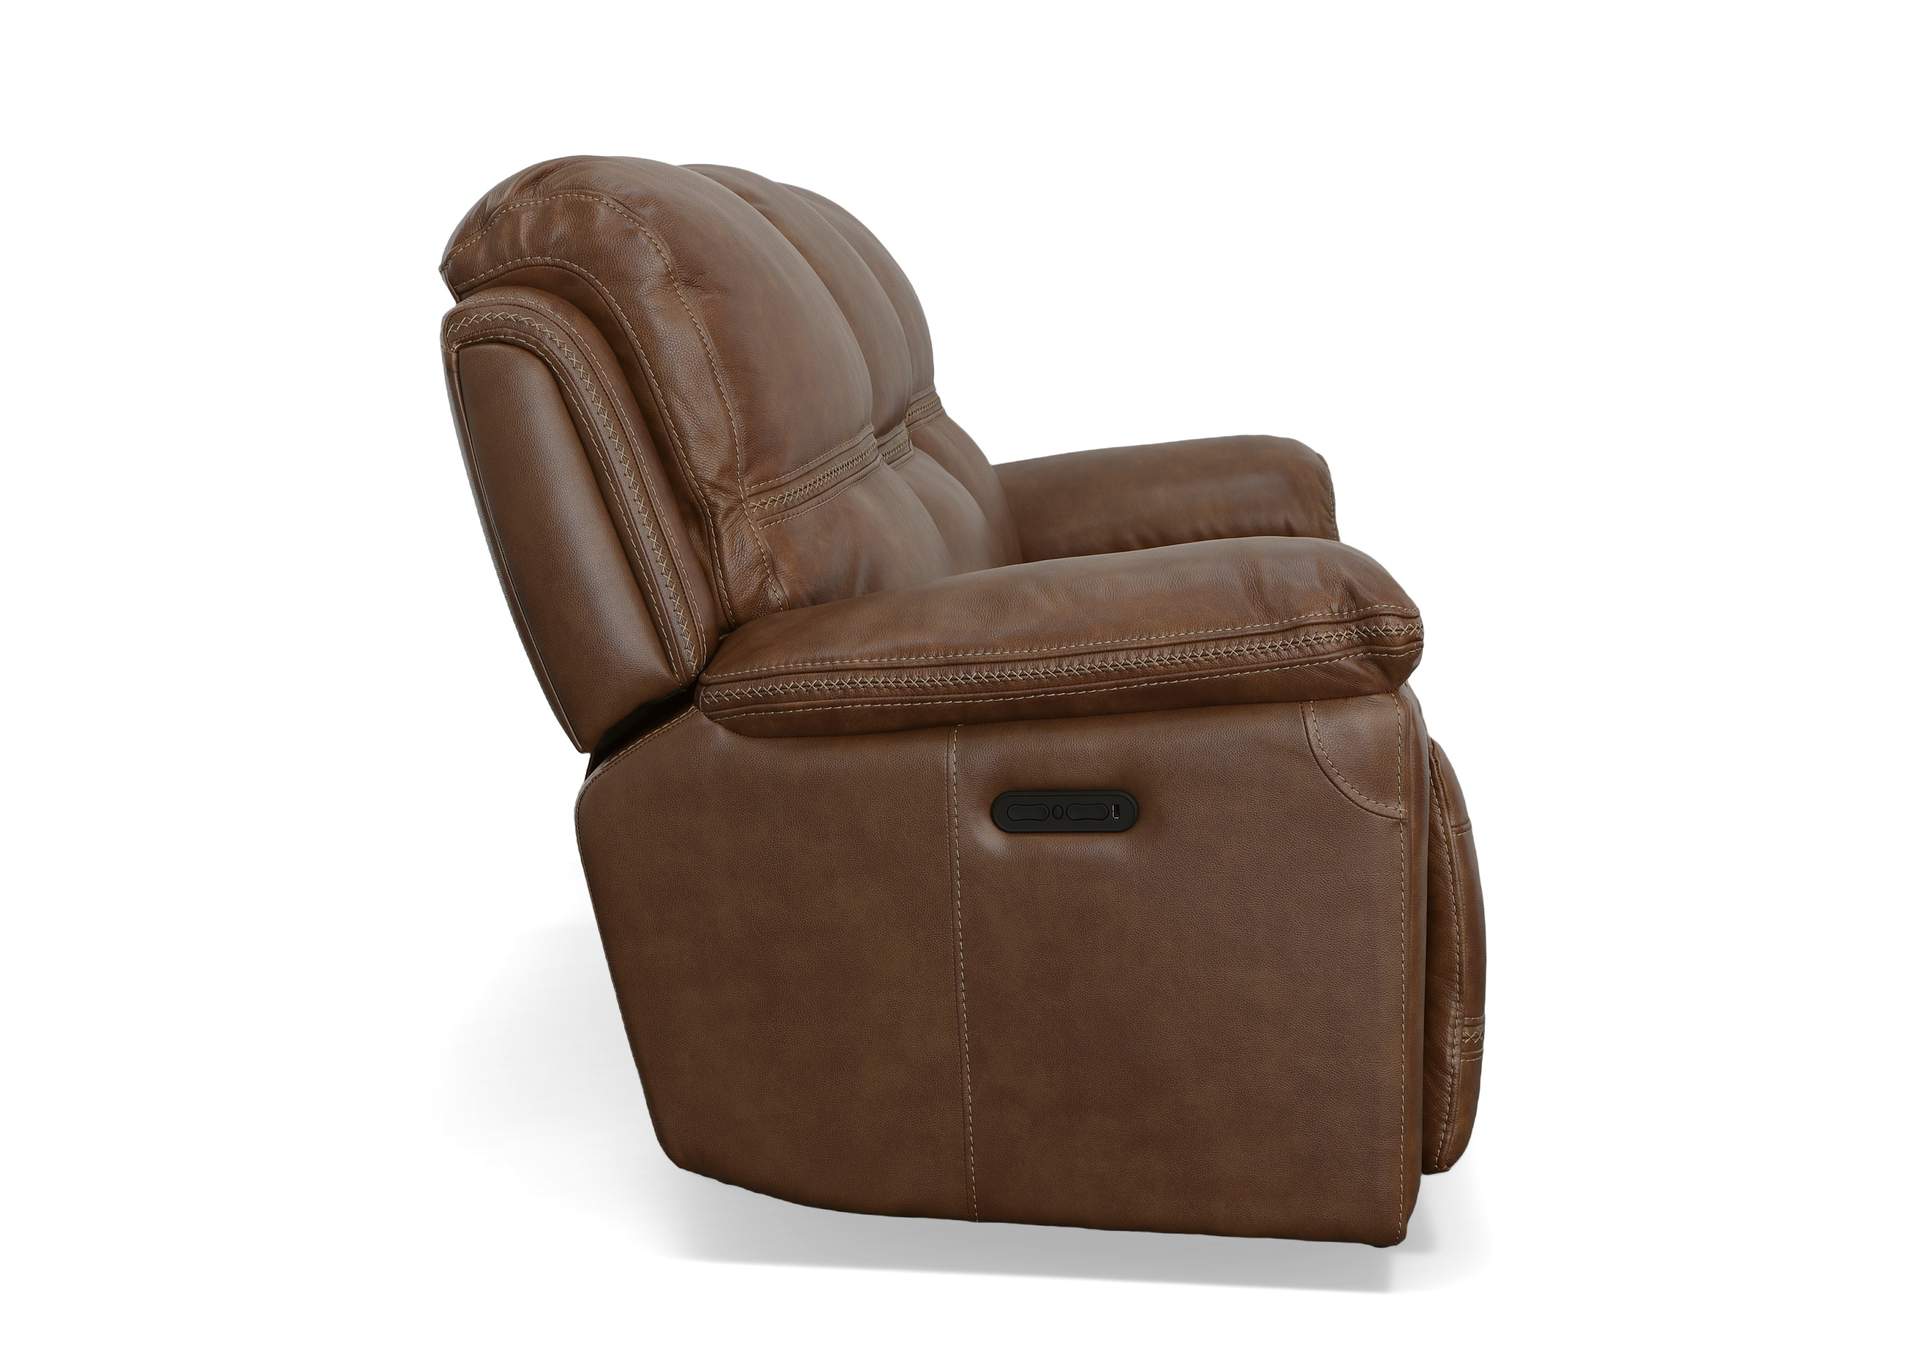 Fenwick Power Reclining Sofa With Power Headrests,Flexsteel